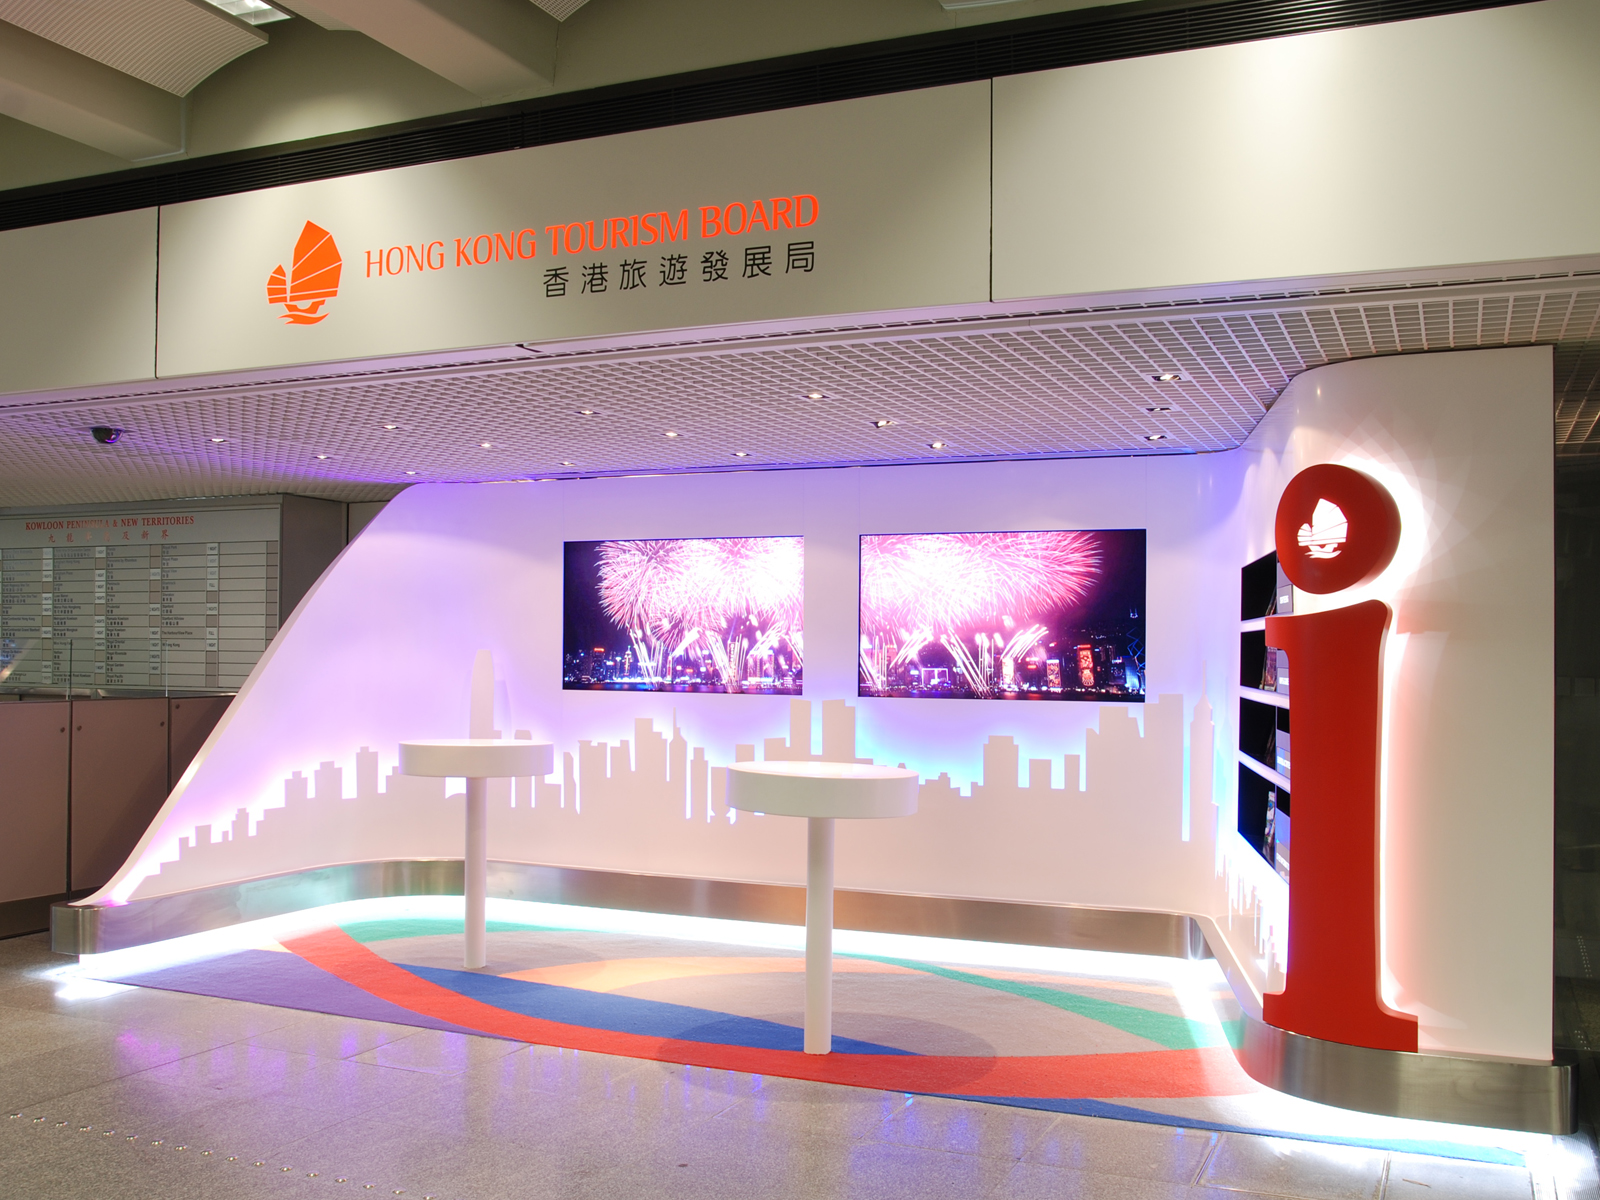 T Galleria  Hong Kong Tourism Board